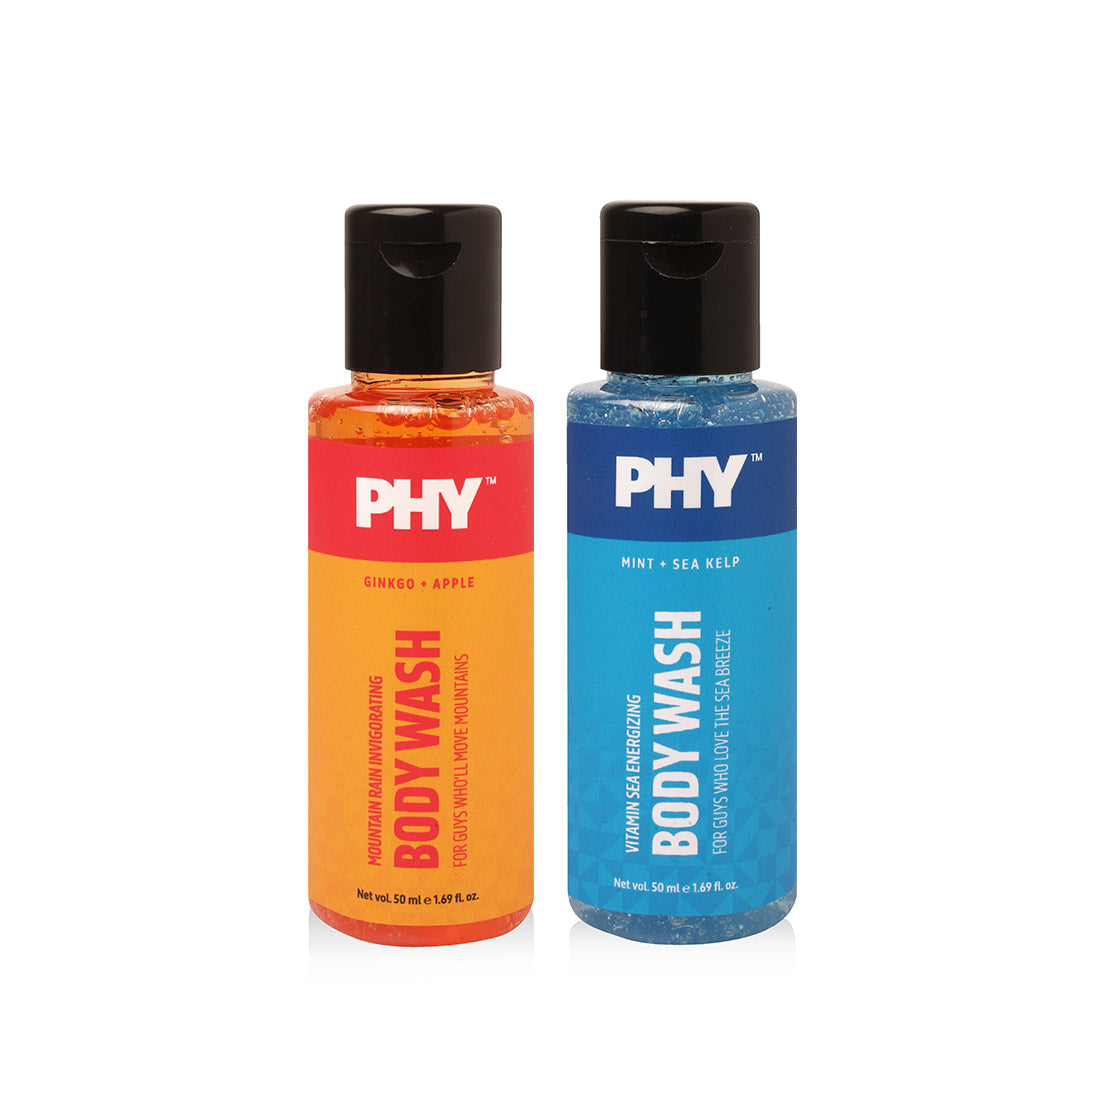 Phy Daily Cleanse Duo - Aqua + Earthy (Body Wash)